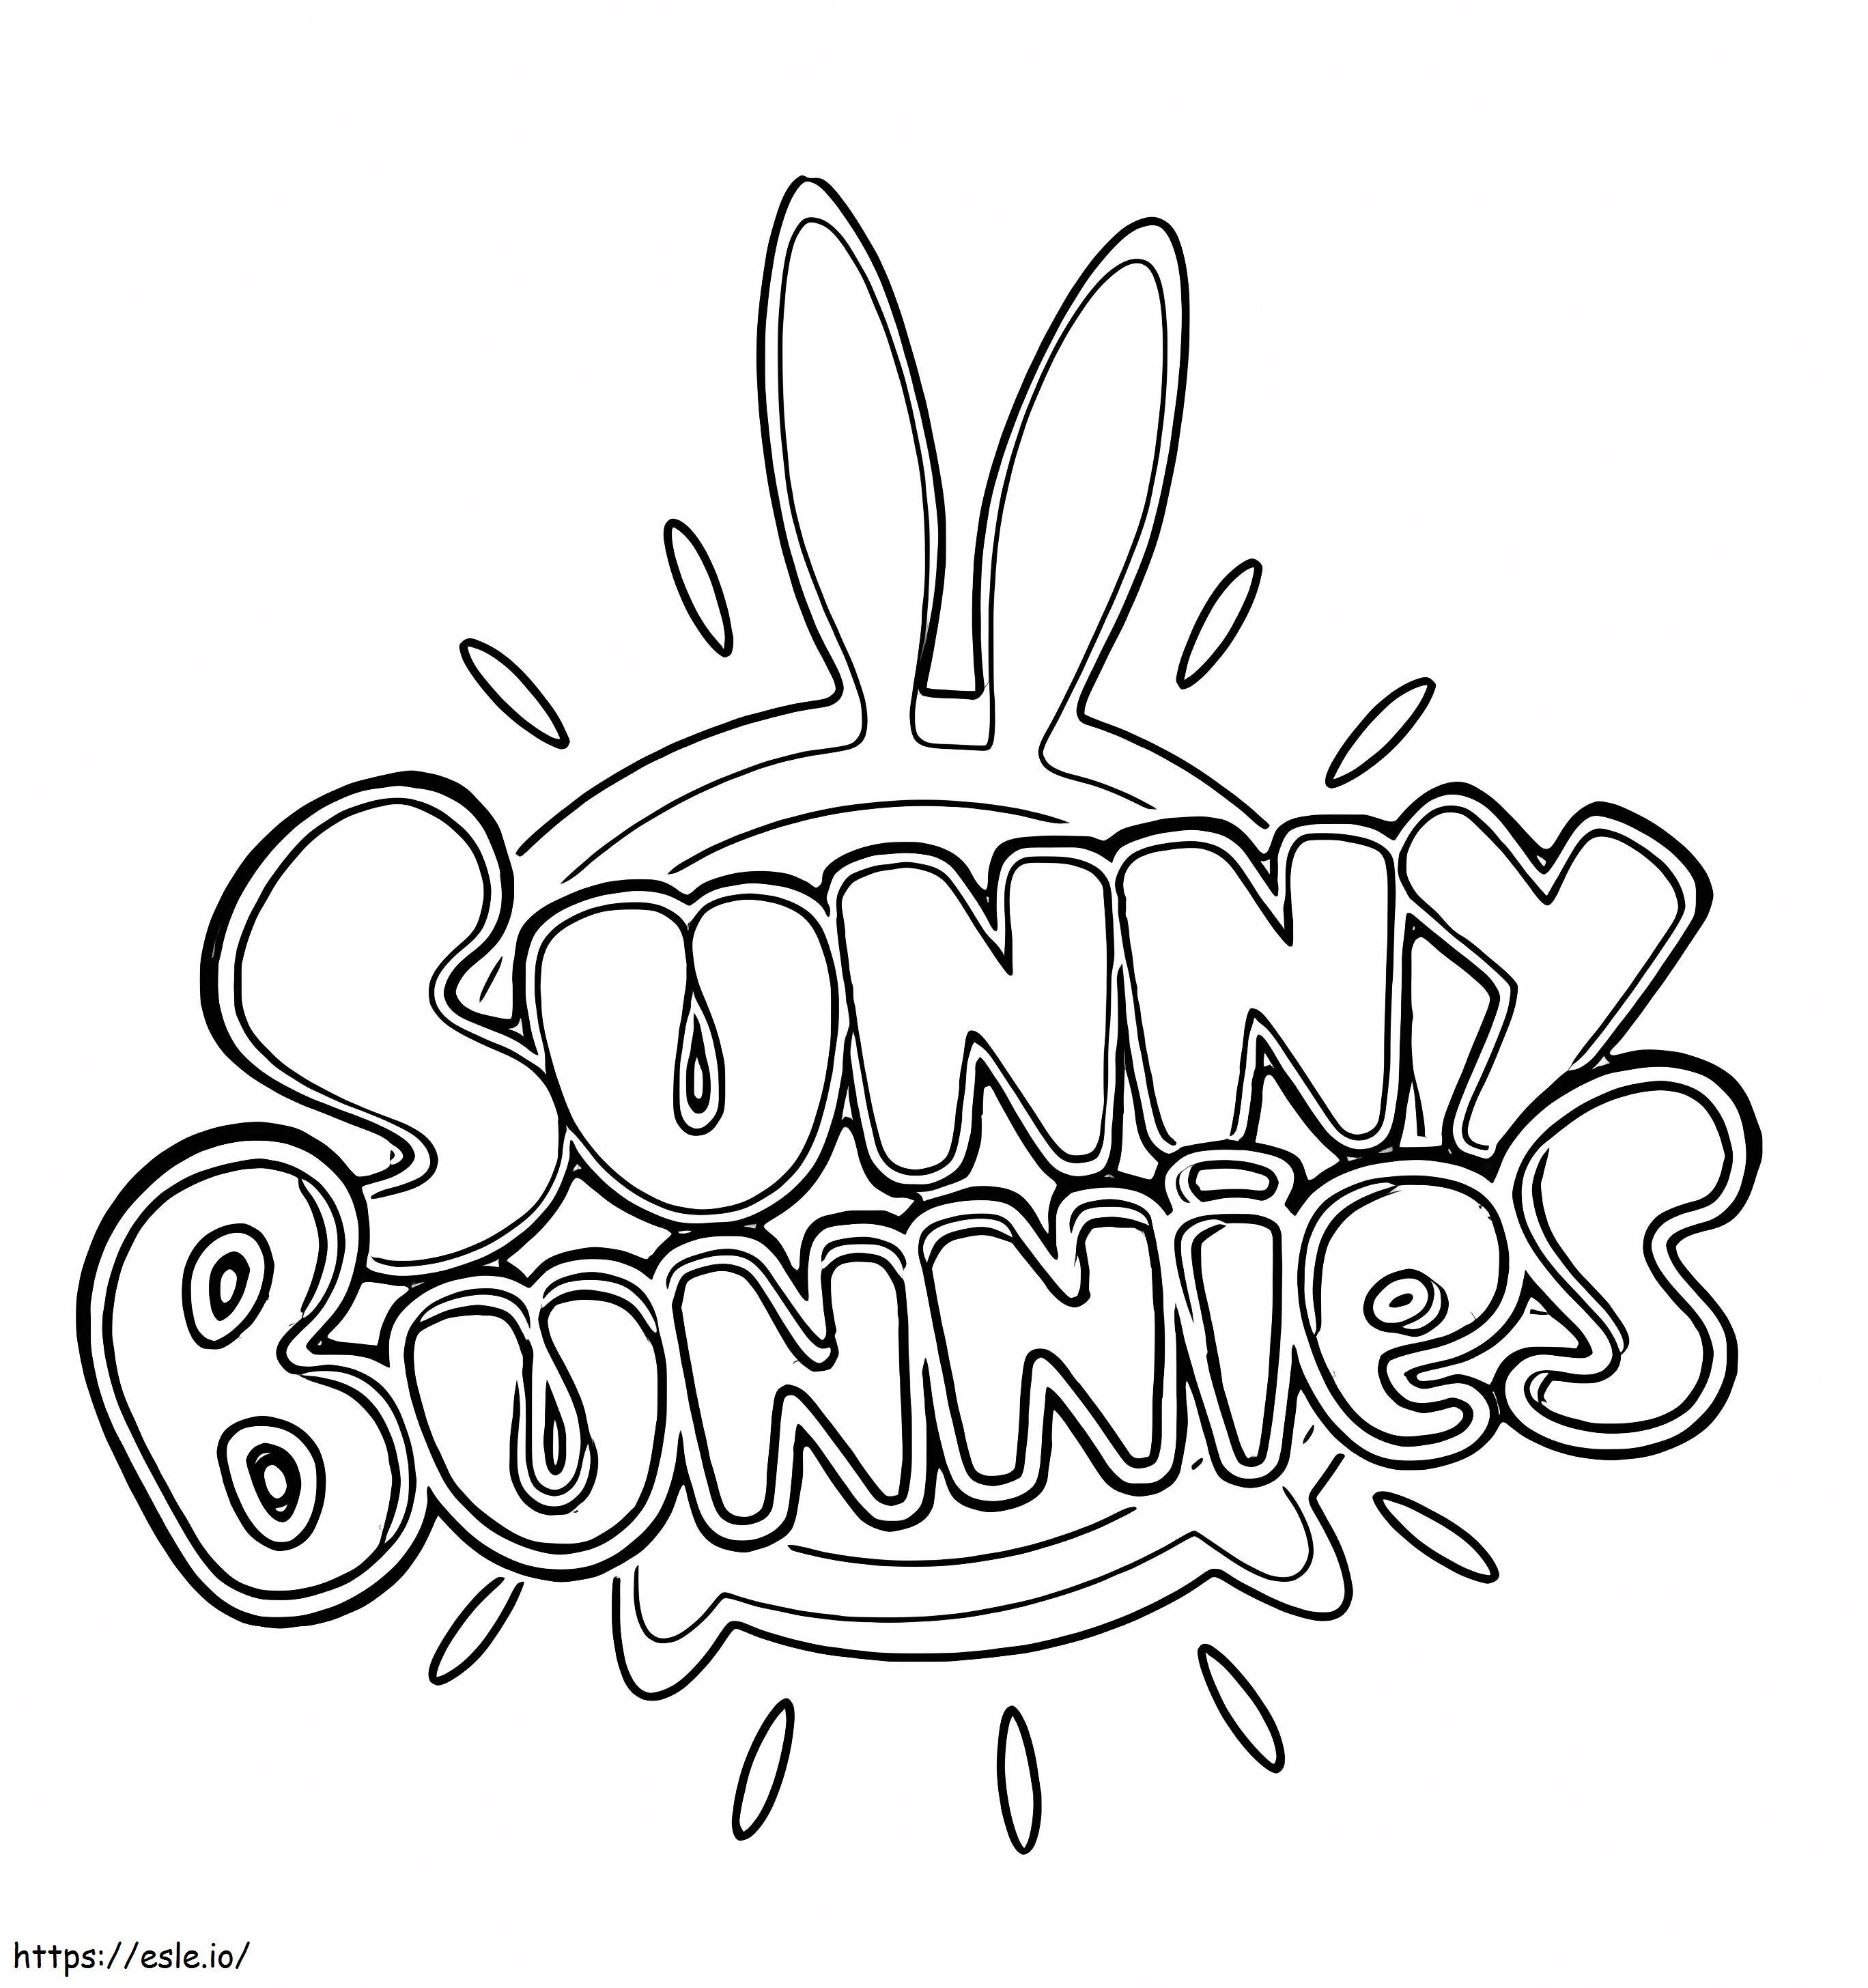 Logo Sunny Bunnies coloring page